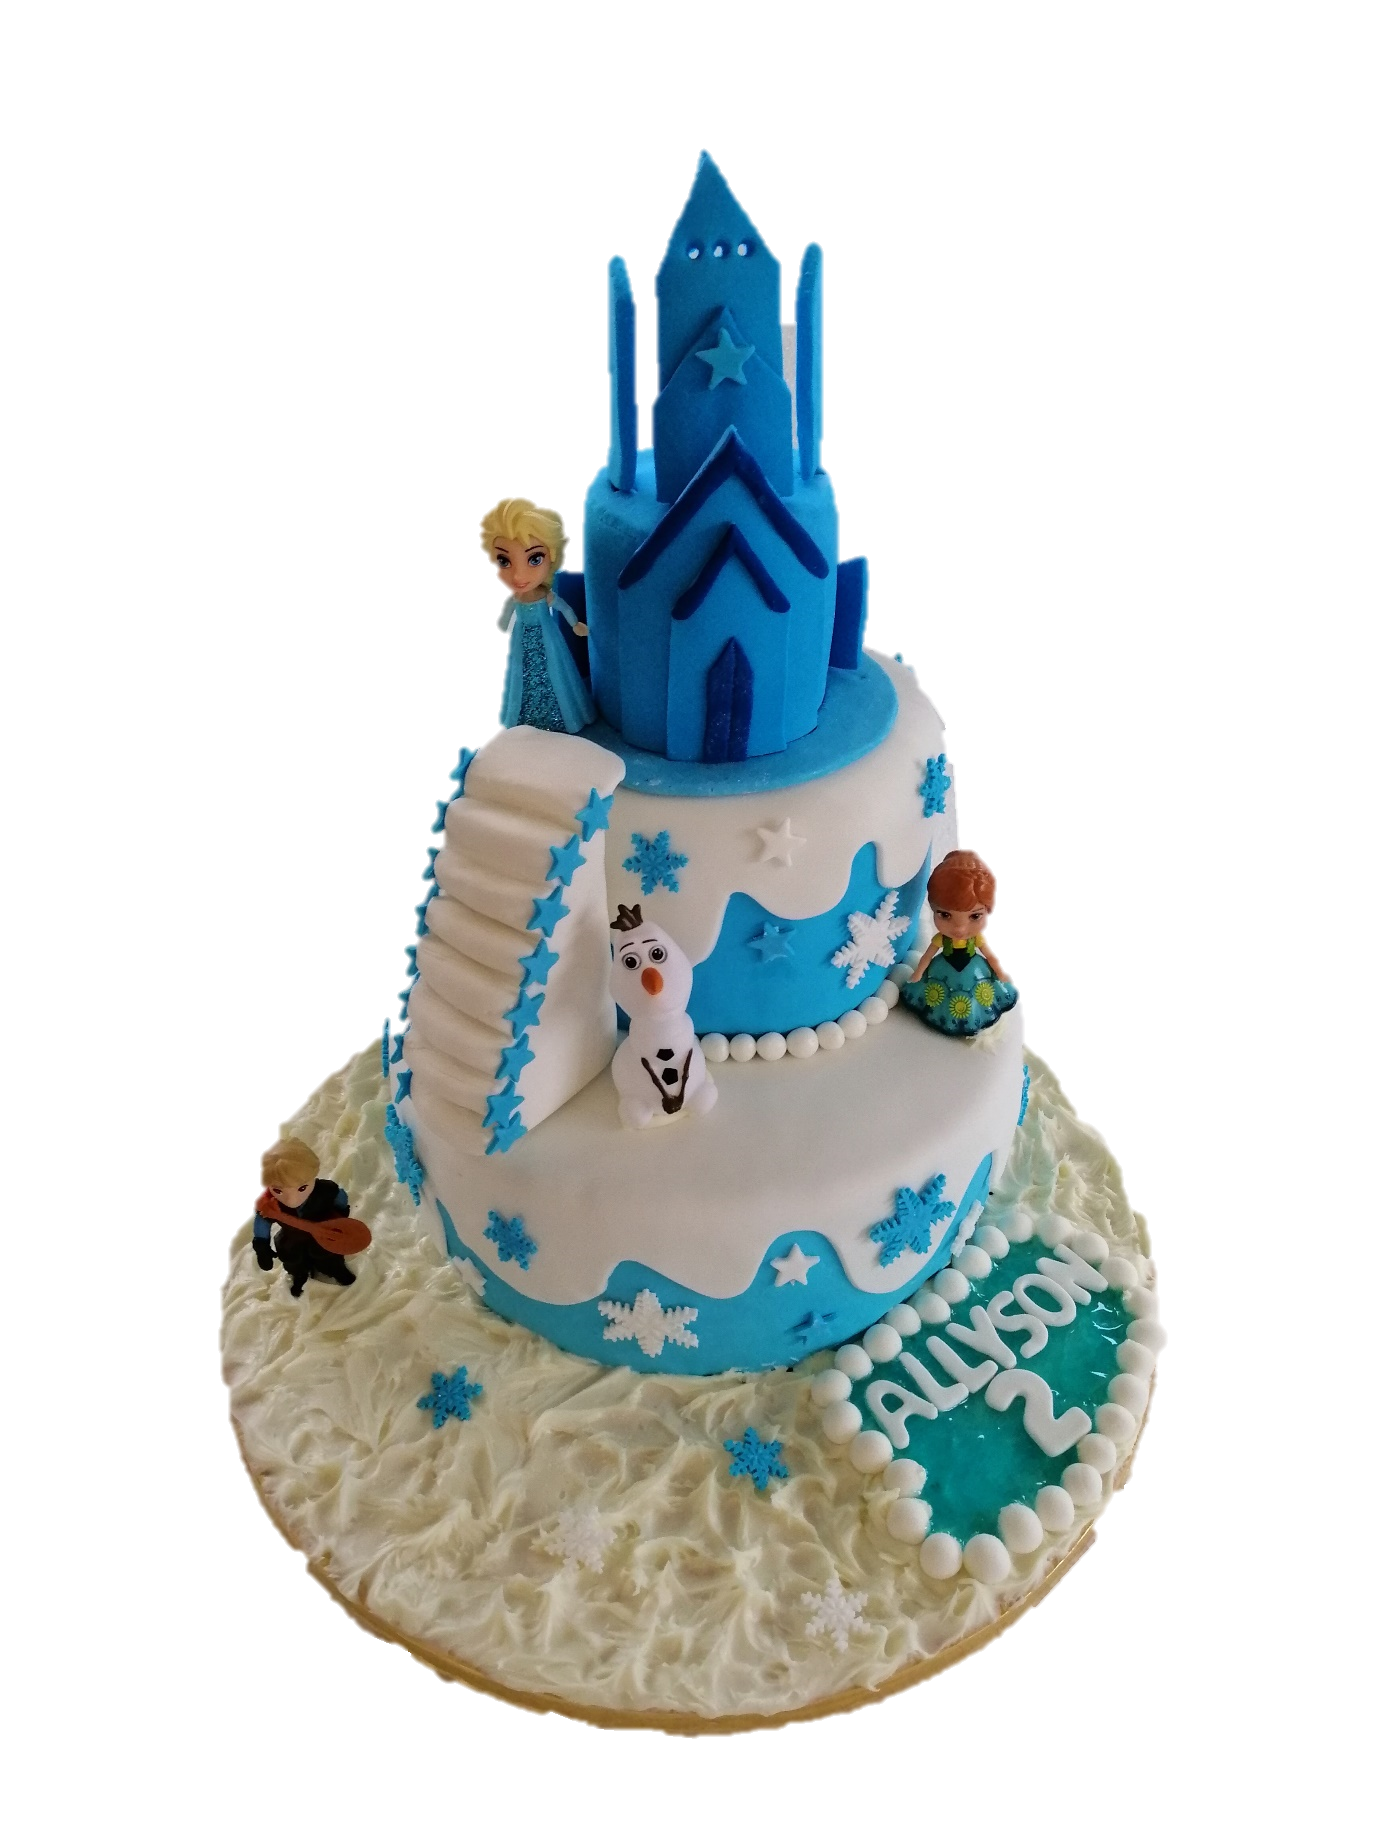 Happy Birthday Sofia 💕 Loved making your vegan Frozen themed castle cake  💕 www.smalldelights.net.au #smalldelights… | Instagram